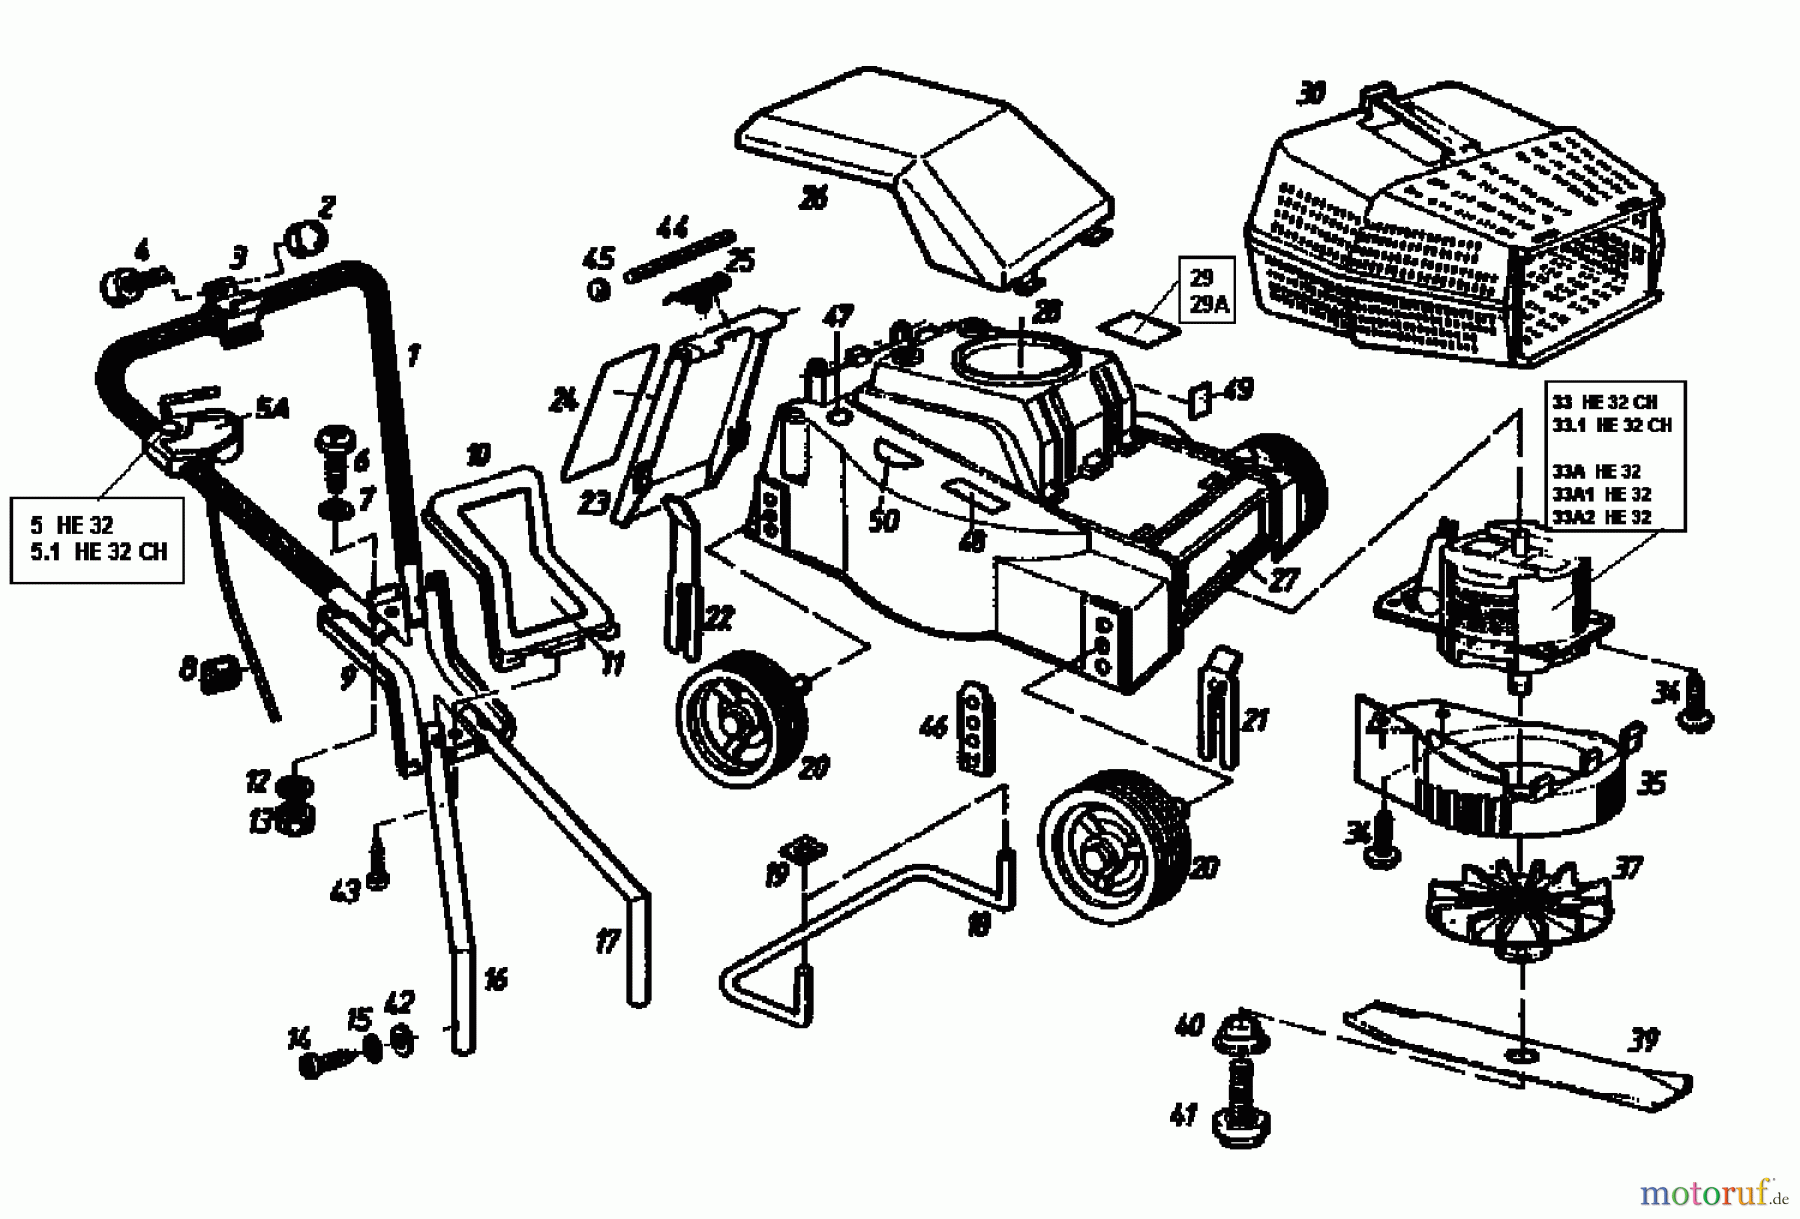  Gutbrod Electric mower HE 32 CH 02872.06  (1990) Basic machine